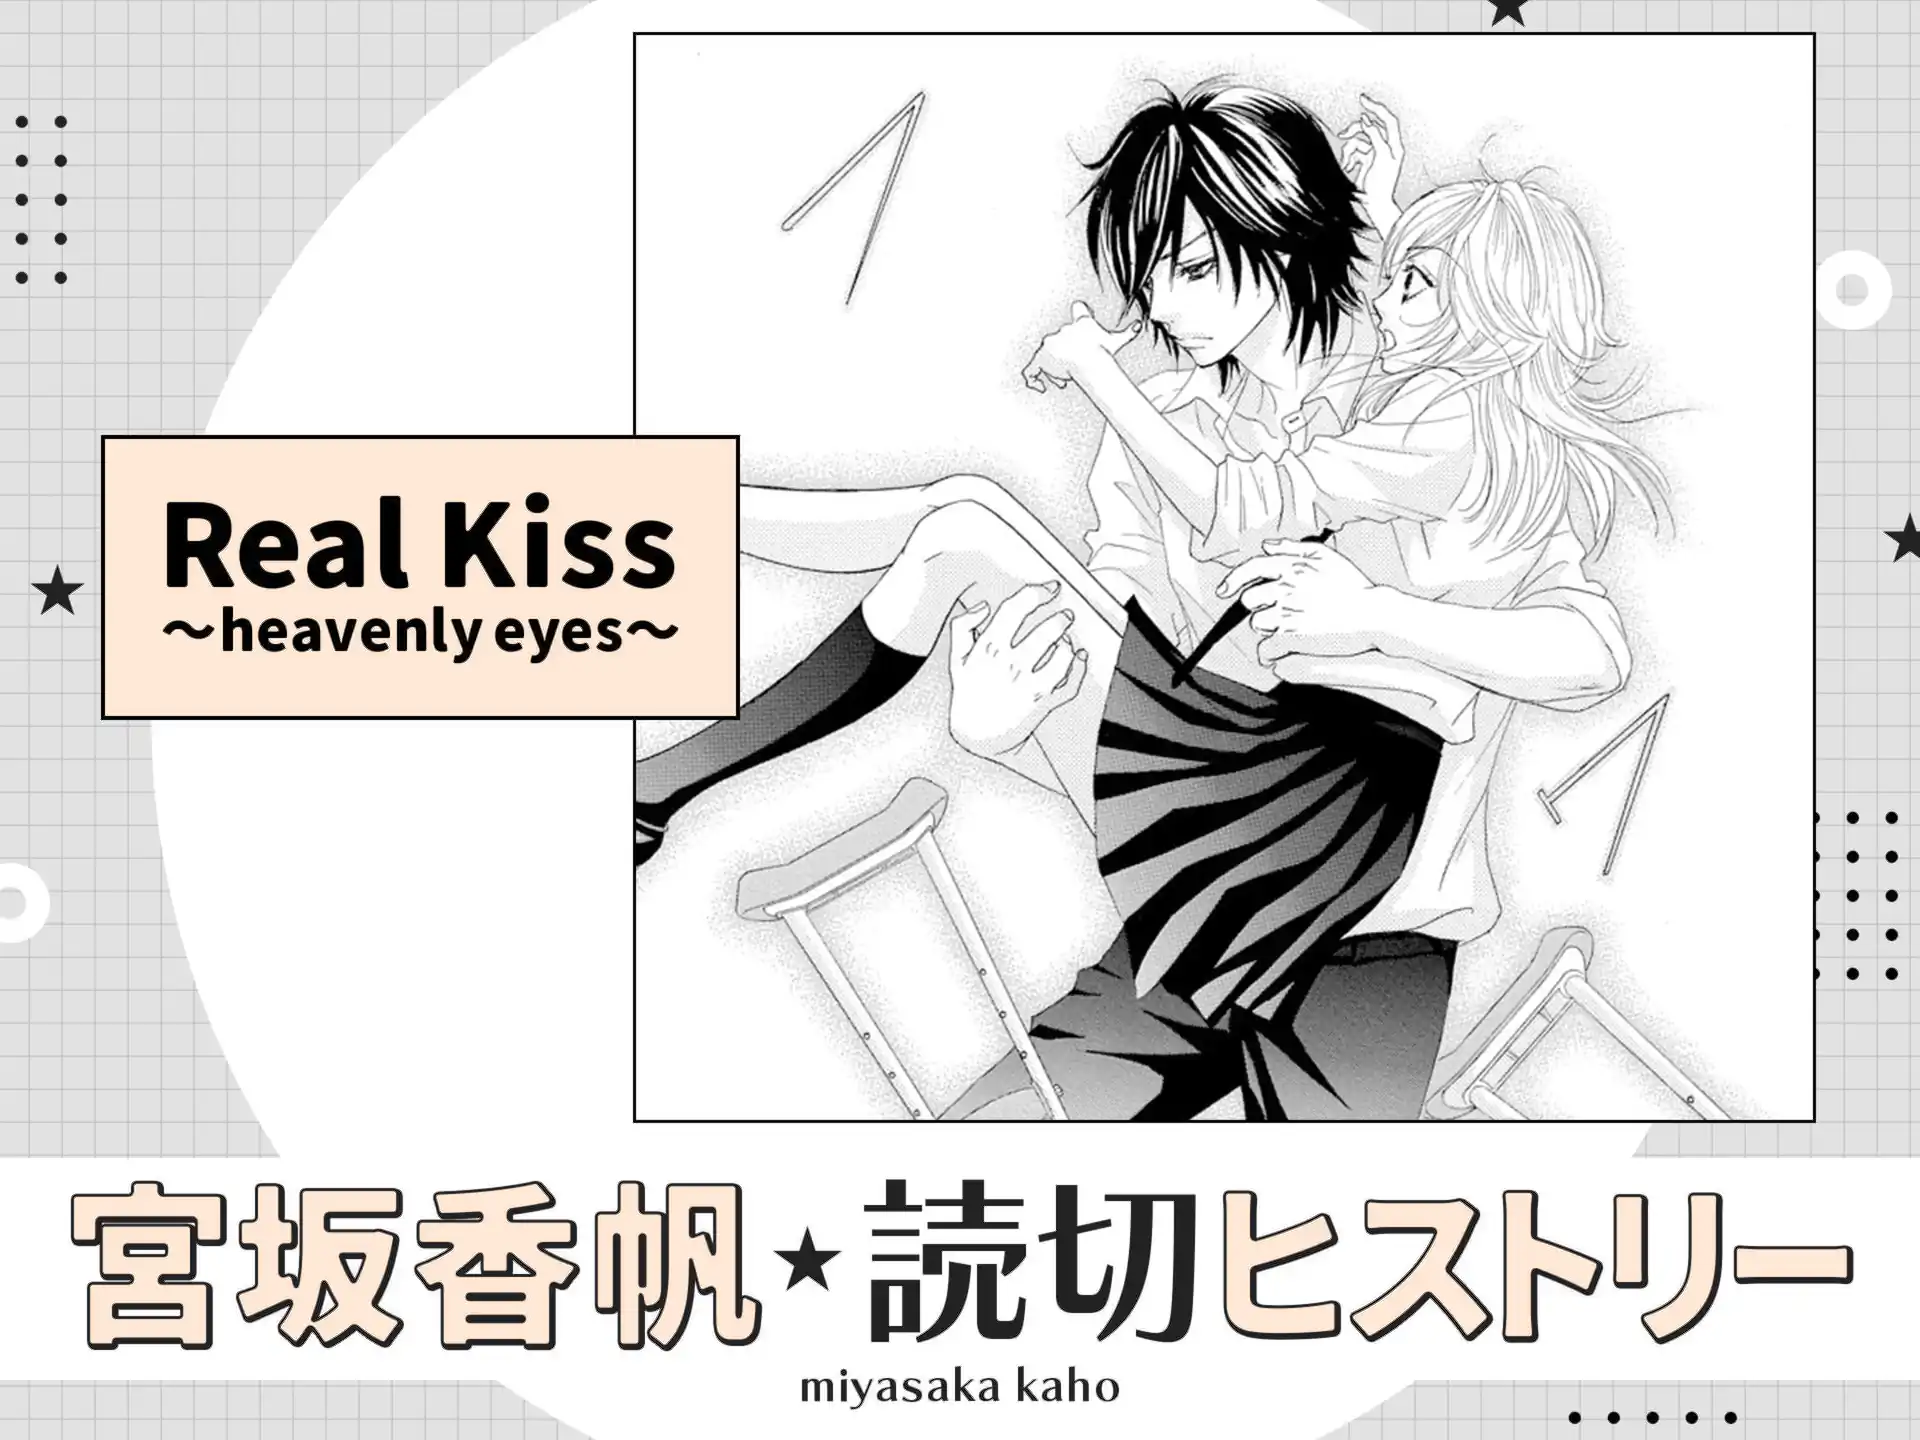 Real Kiss 続編〜heavenly eyes〜 の作品サムネイル